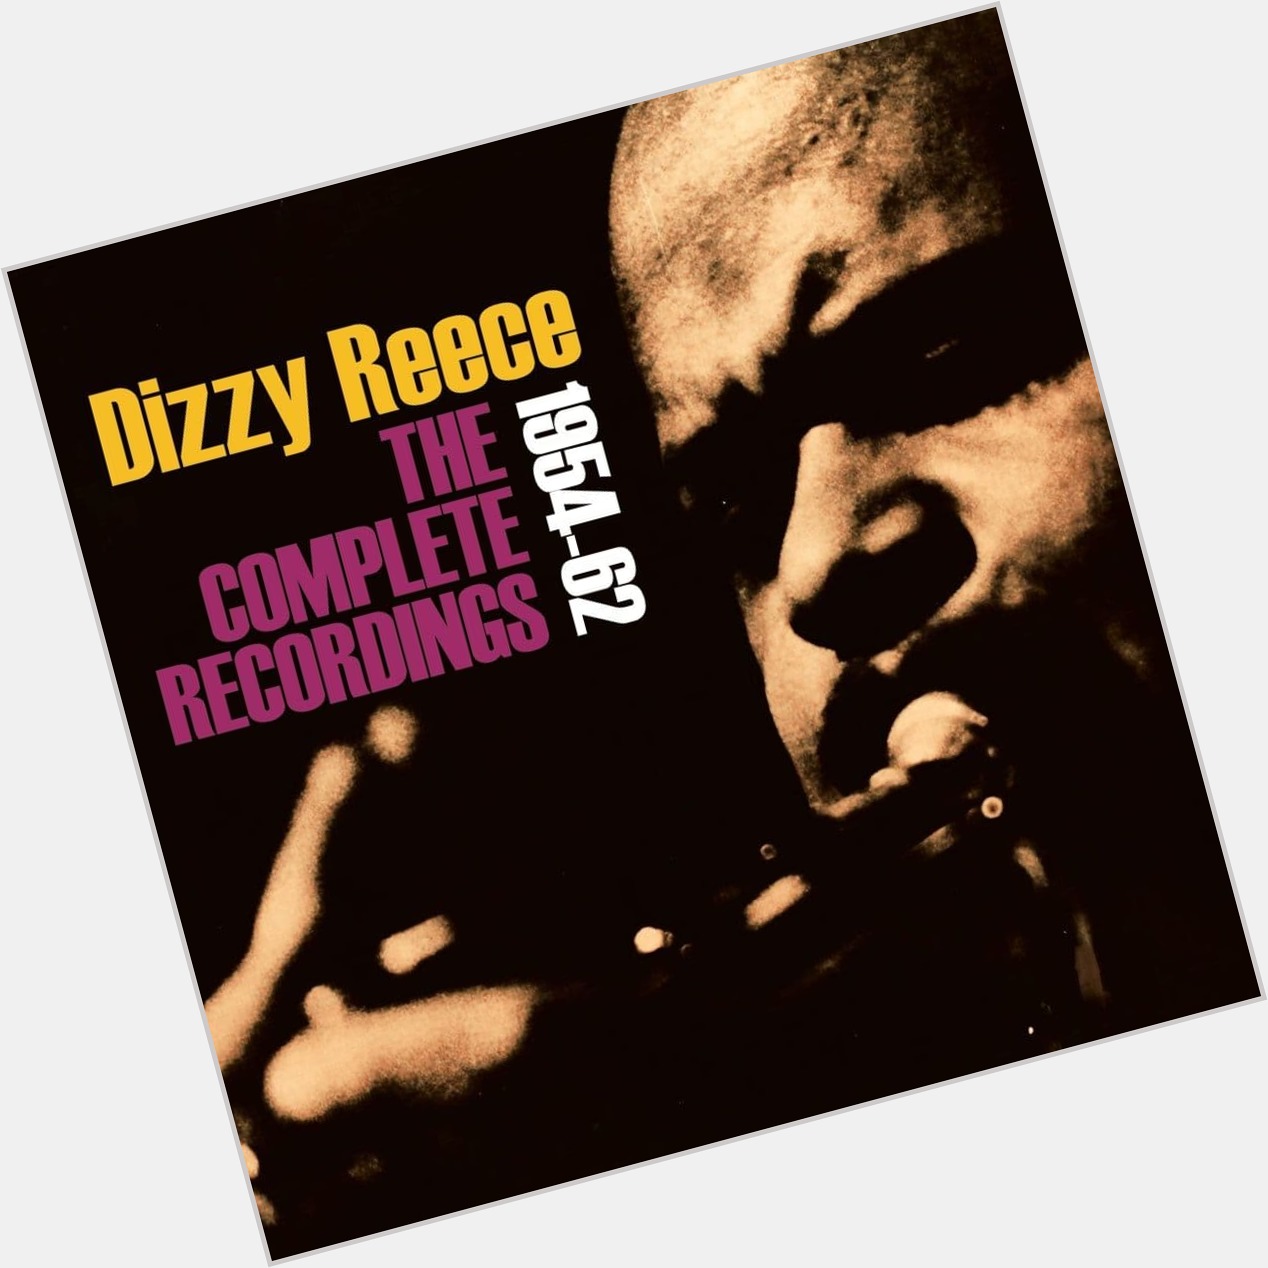 Dizzy Reece exclusive hot pic 3